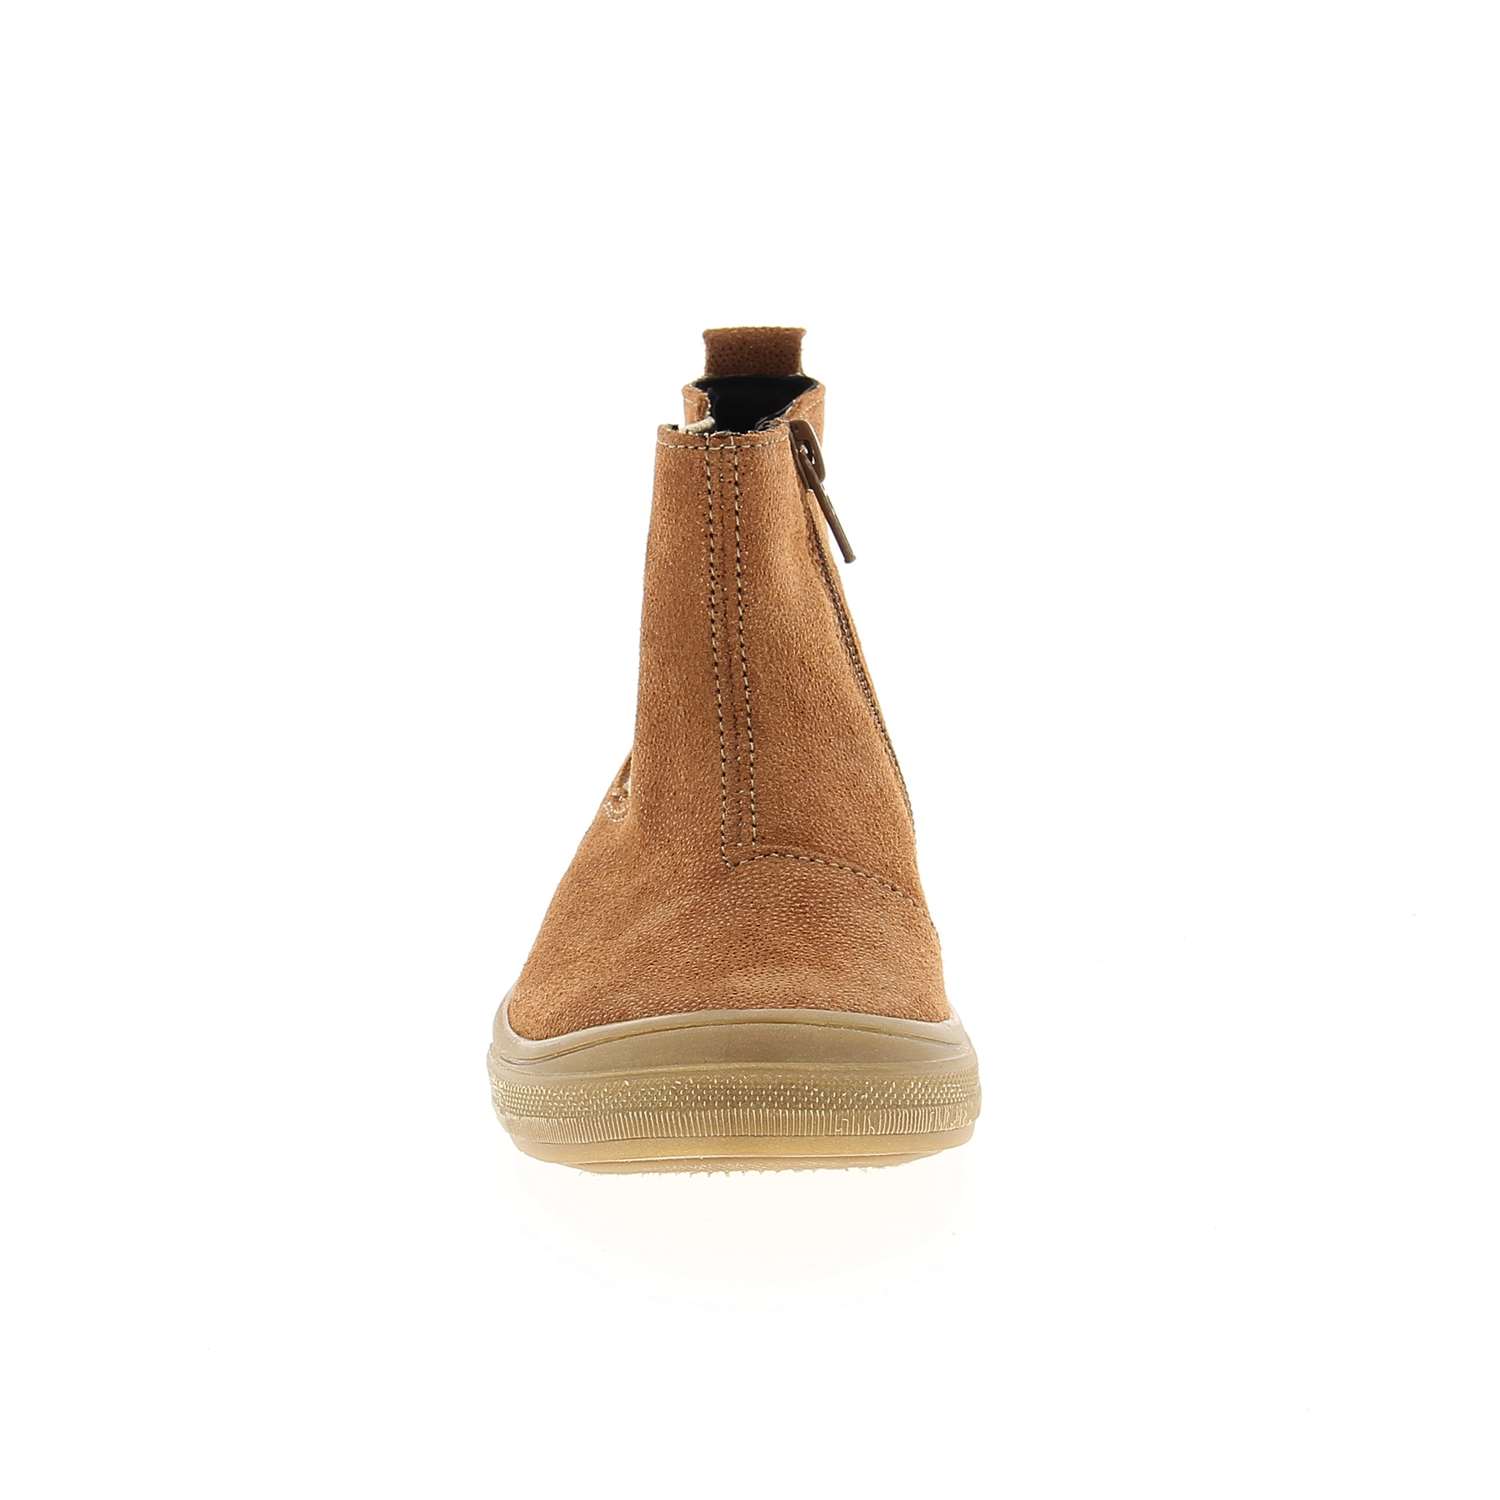 03 - SEBESTAR - BOPY - Boots et bottines - Croûte de cuir